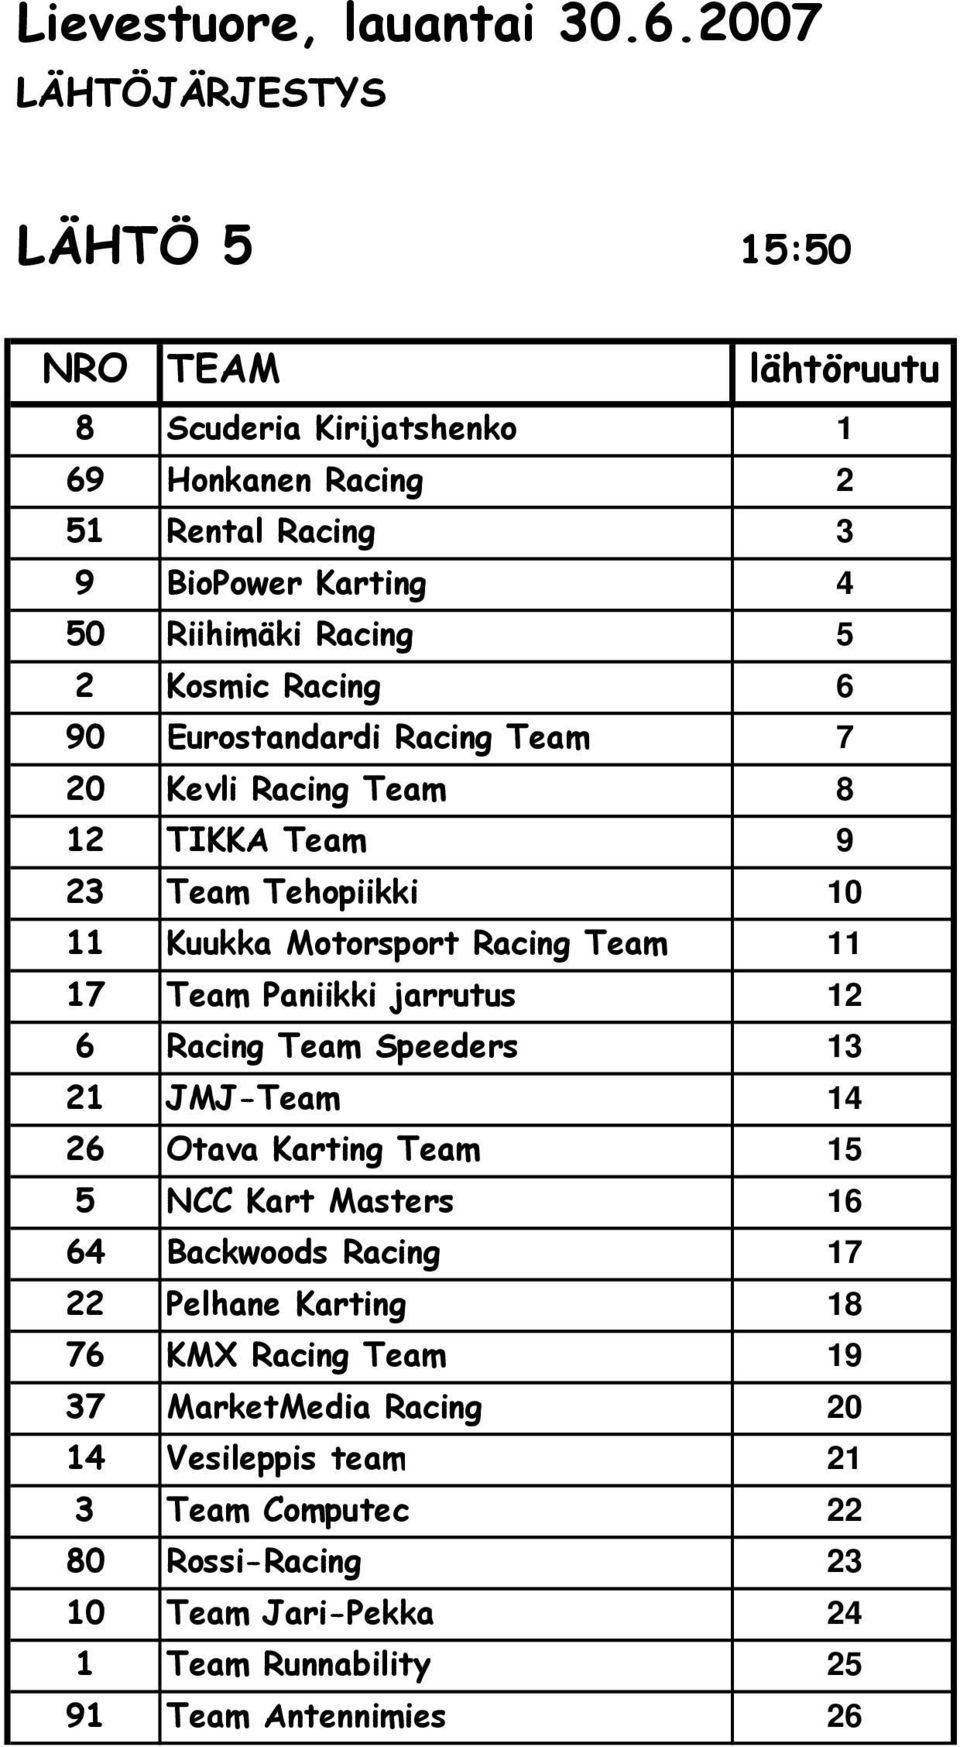 12 6 Racing Team Speeders 13 21 JMJ-Team 14 26 Otava Karting Team 15 5 NCC Kart Masters 16 64 Backwoods Racing 17 22 Pelhane Karting 18 76 KMX Racing